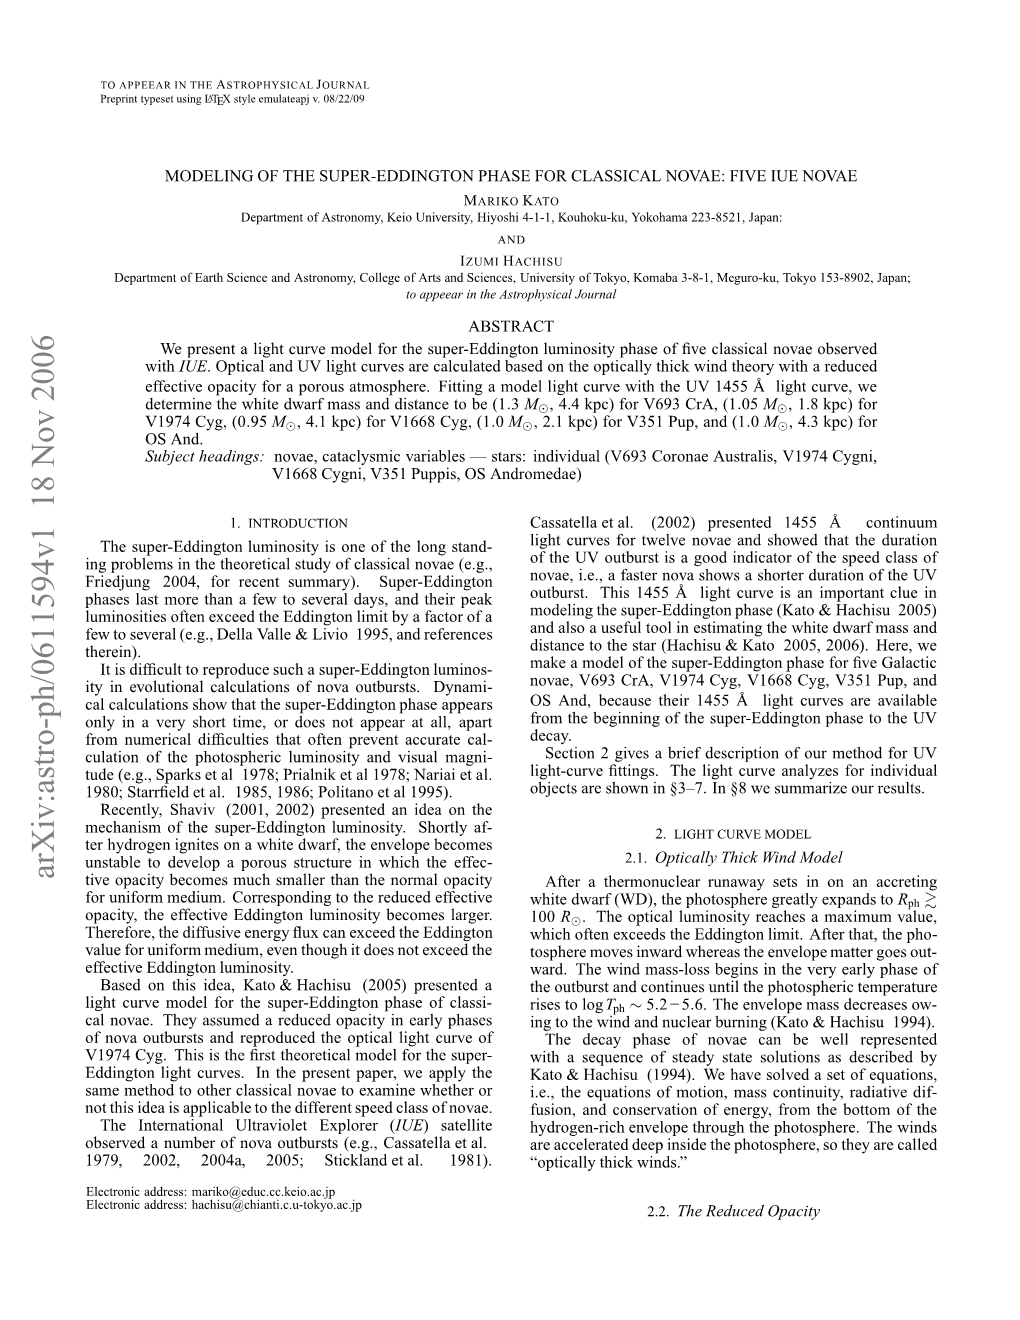 Modeling of the Super-Eddington Phase for Classical Novae: Five